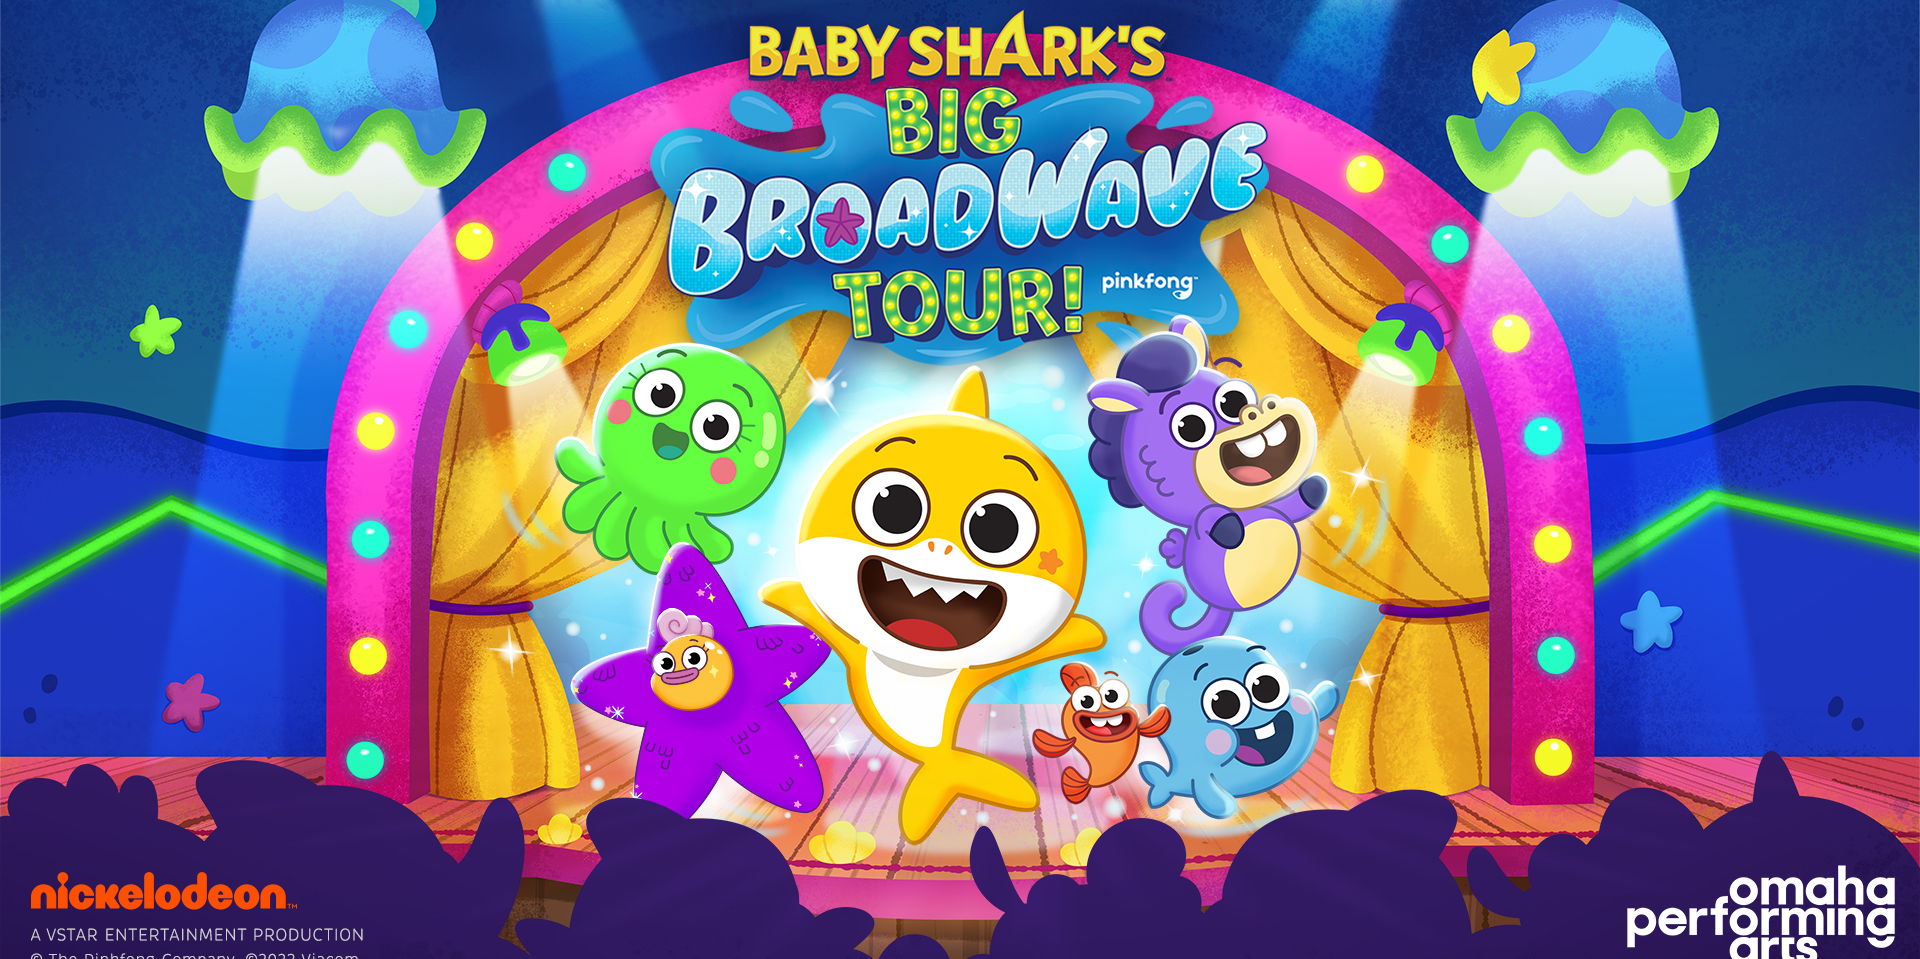  Baby Shark Big Broadwave Tour promotional image